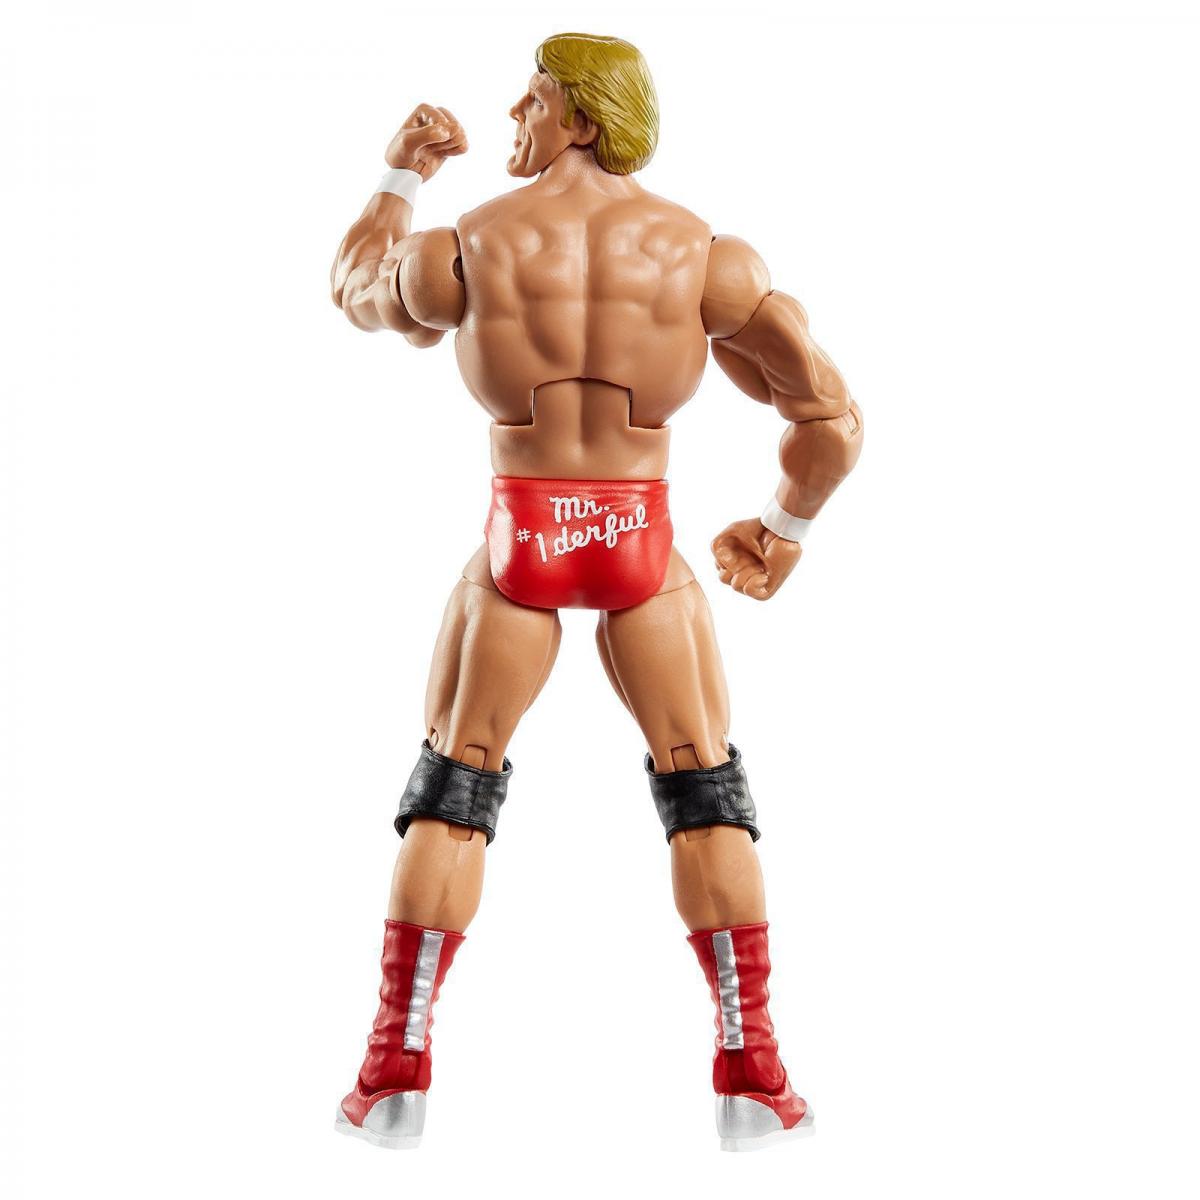 2020 WWE Mattel Elite Collection Legends Series 8 "Mr. Wonderful" Paul Orndorff